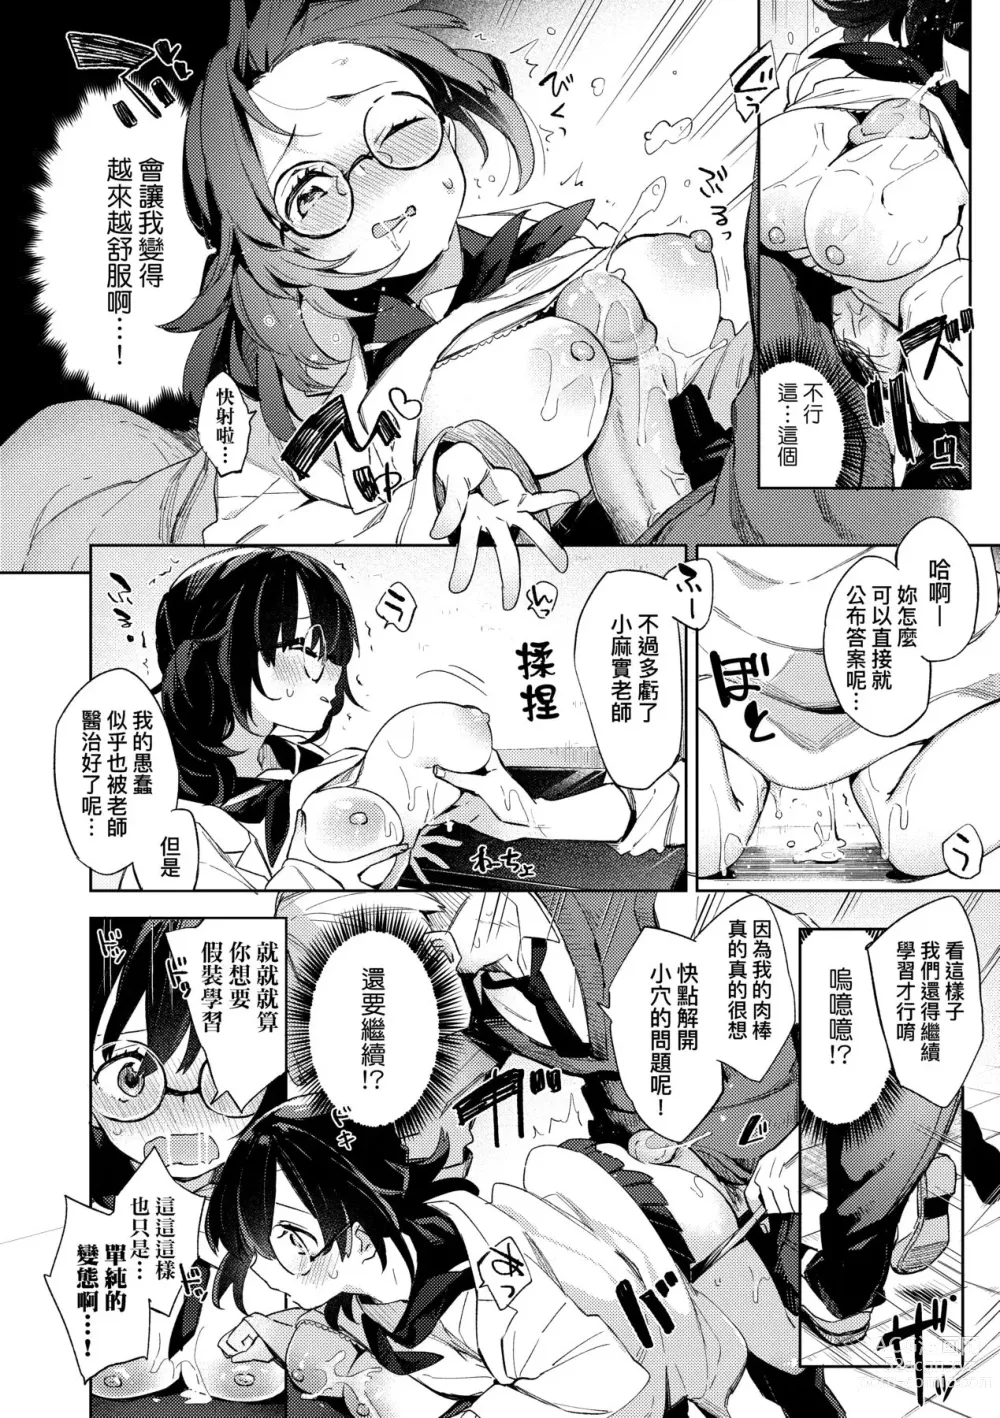 Page 192 of manga Echi Echi School Life (decensored)